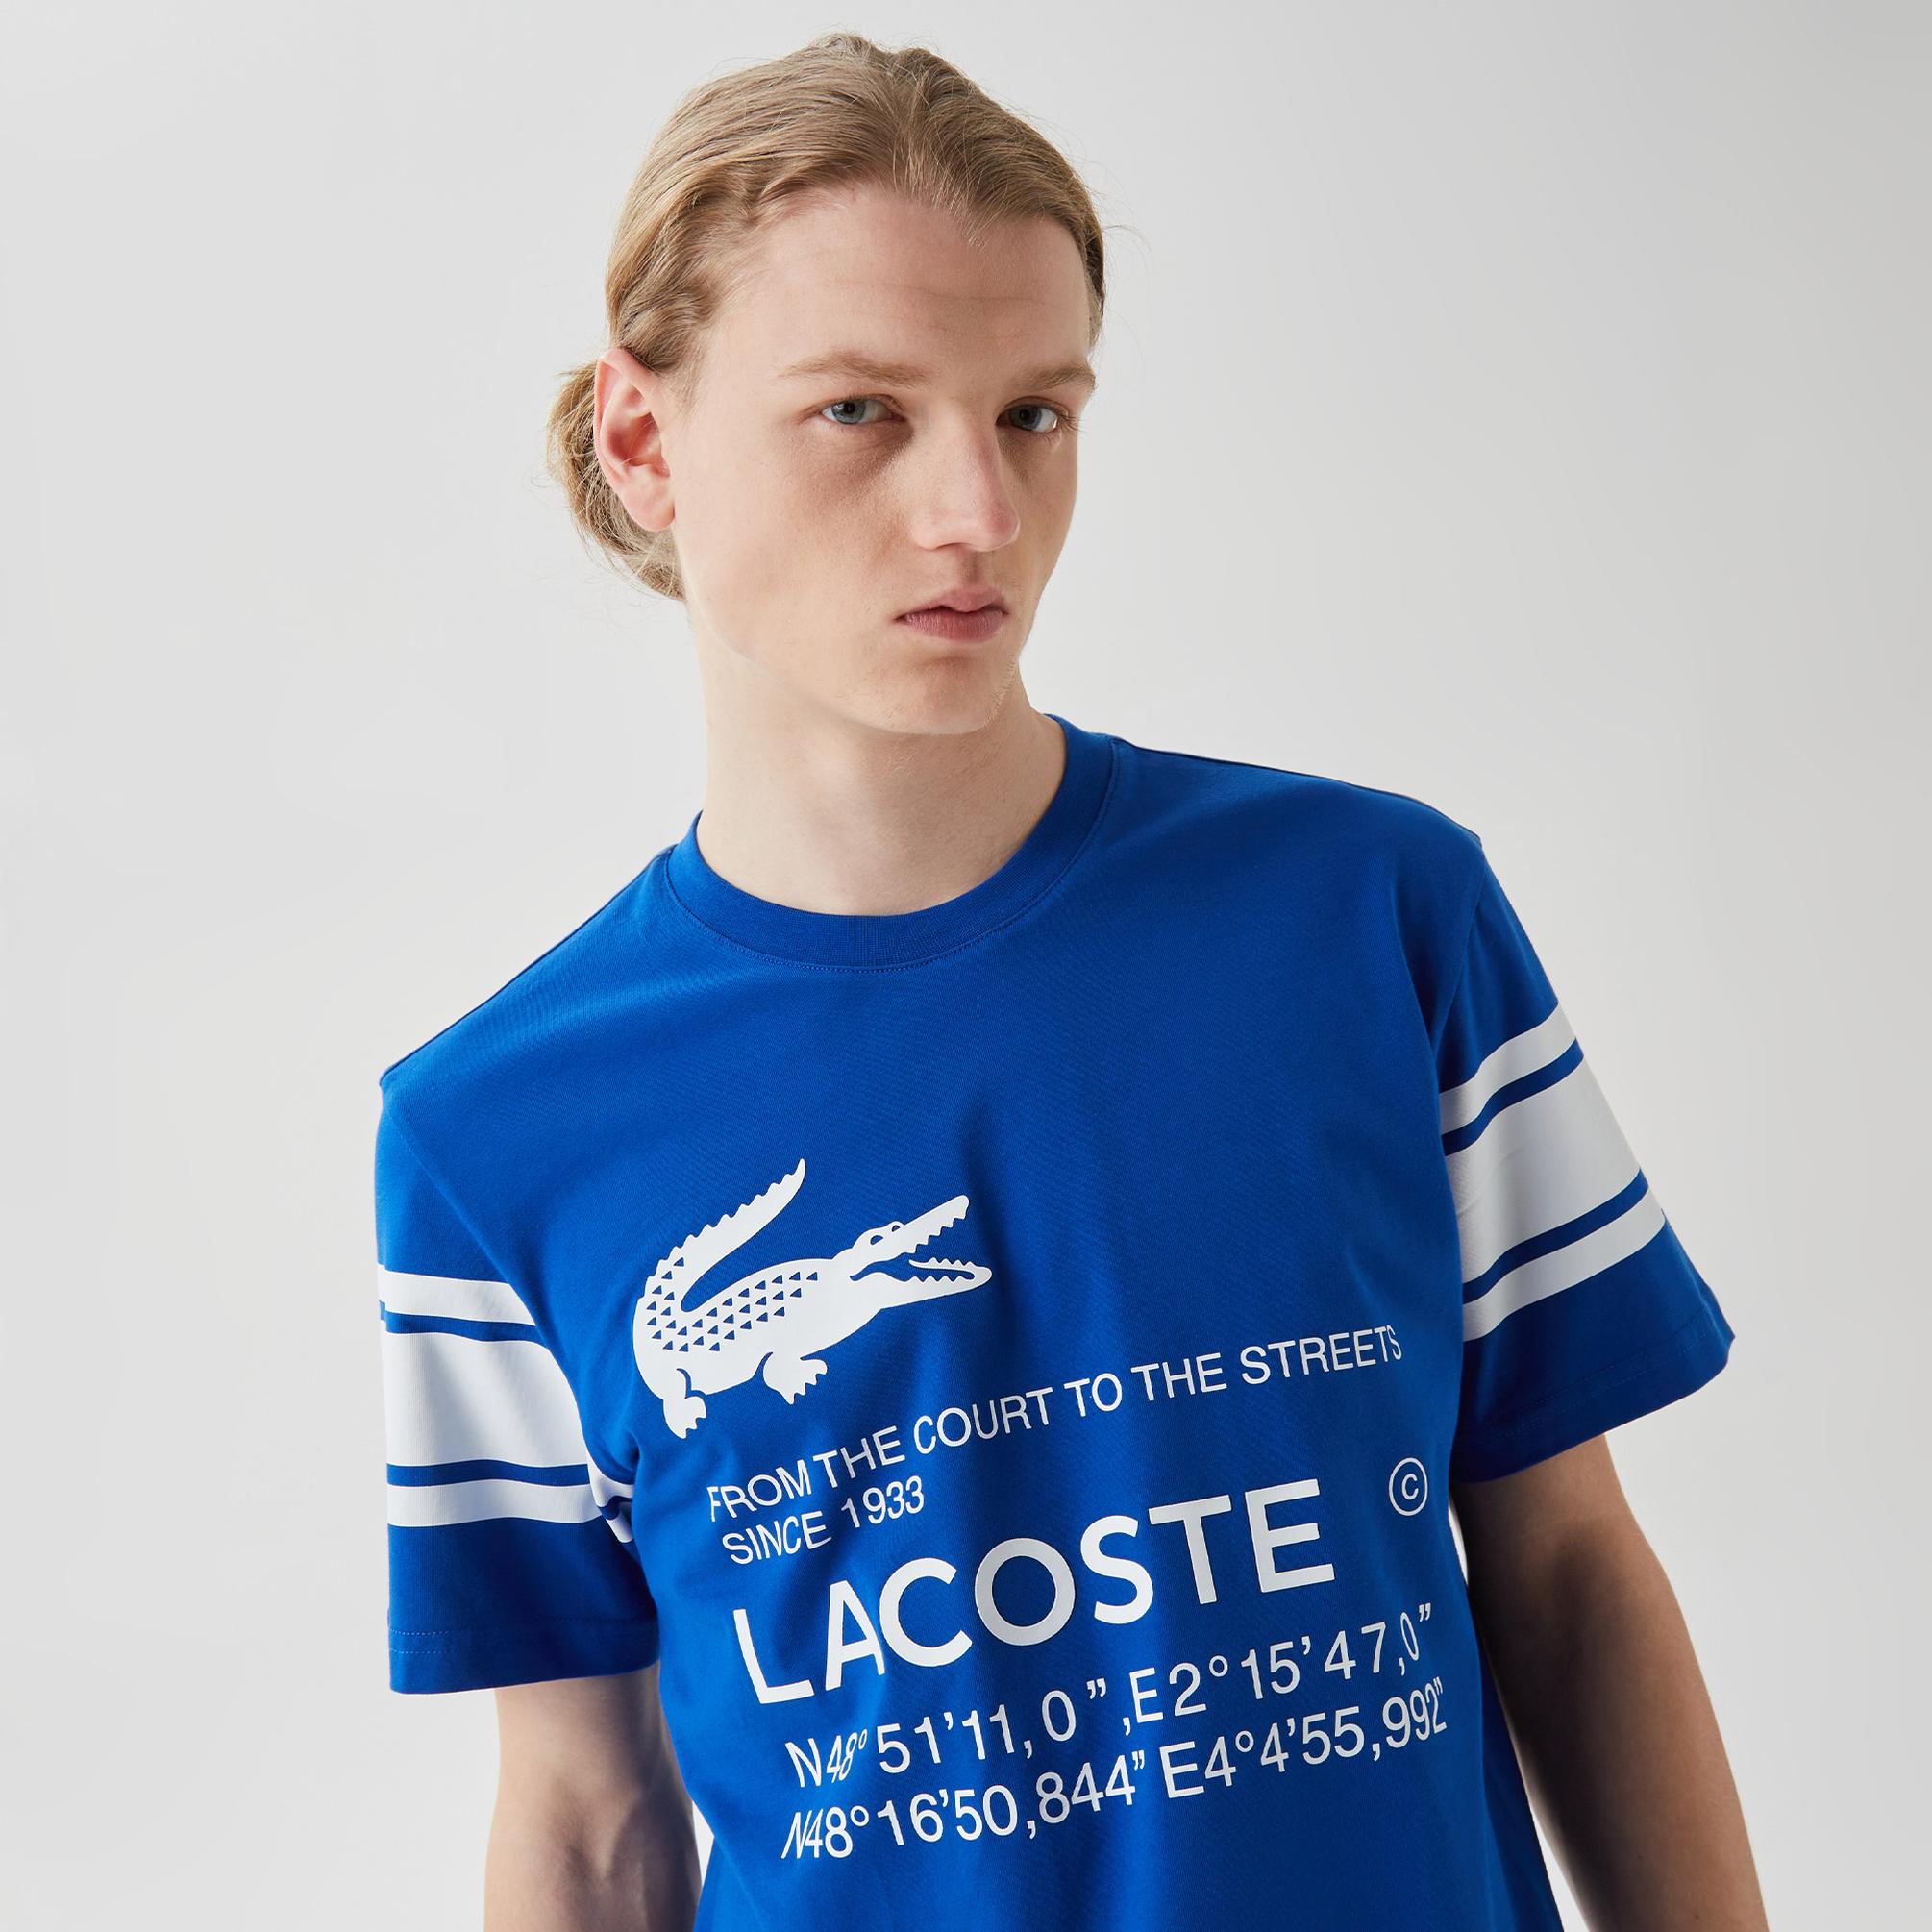  Lacoste Active Erkek Mavi T-Shirt